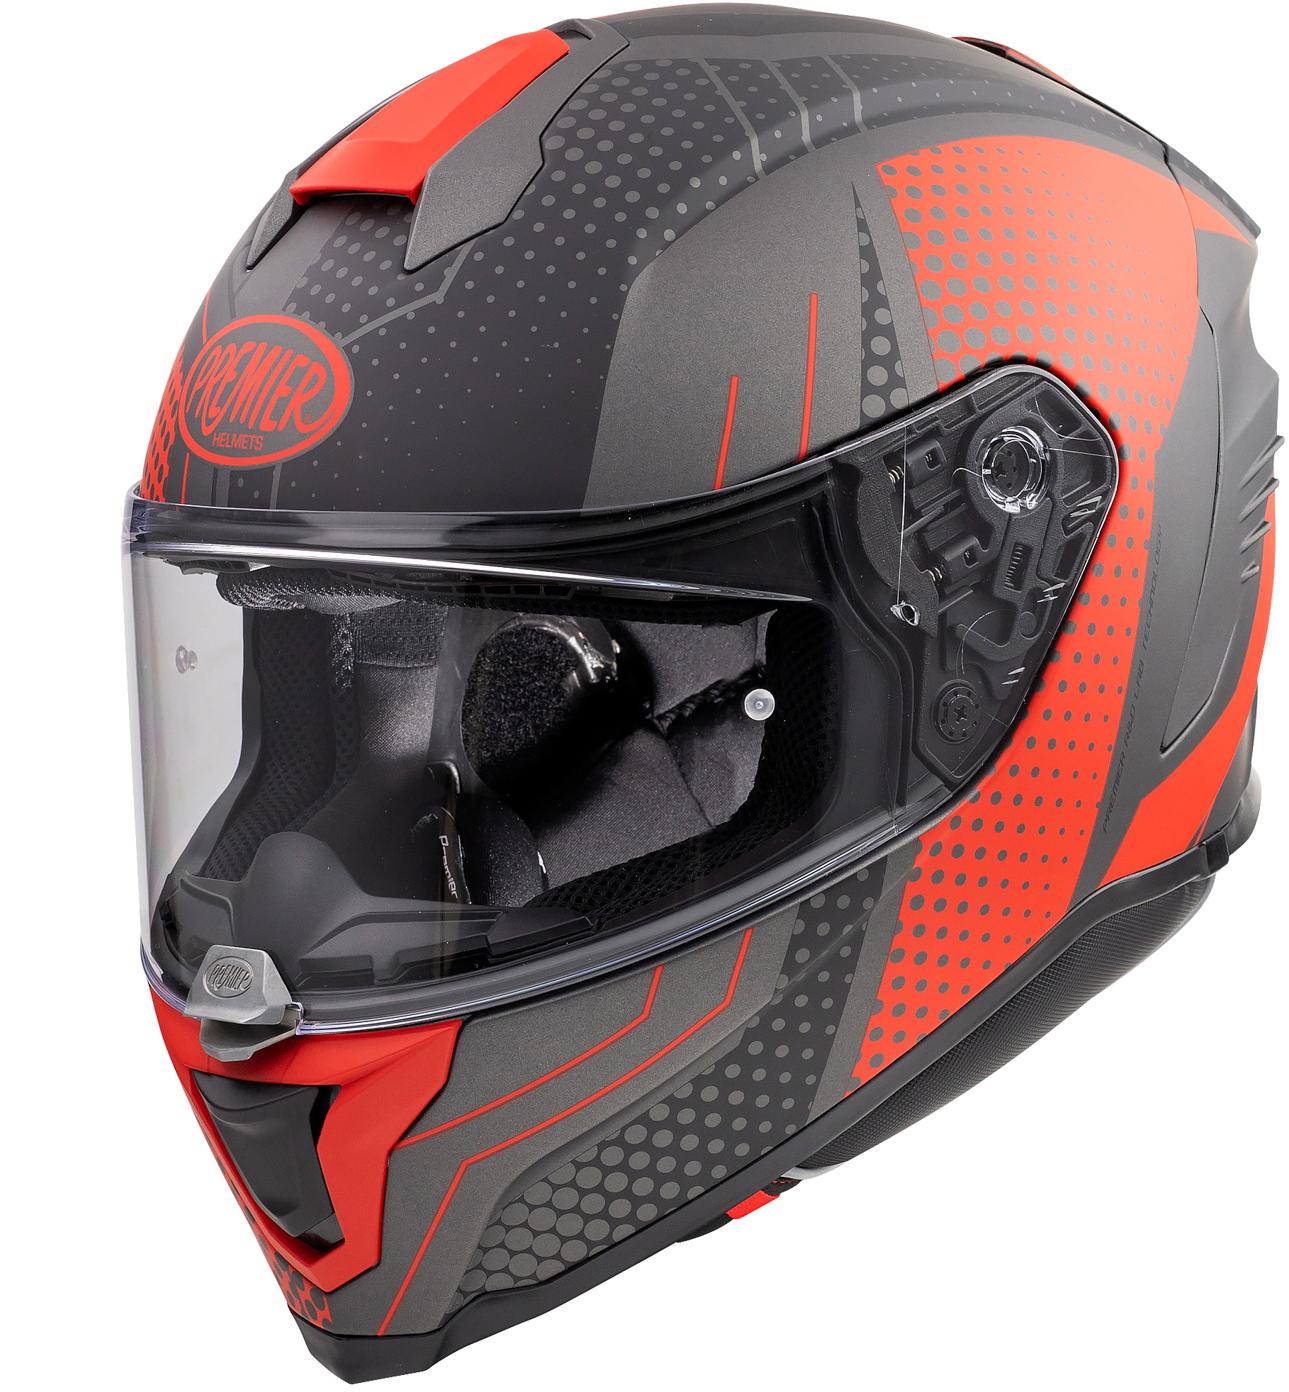 Premier Hyper Bp Full Face Motorcycle Helmet - Black/Red, L